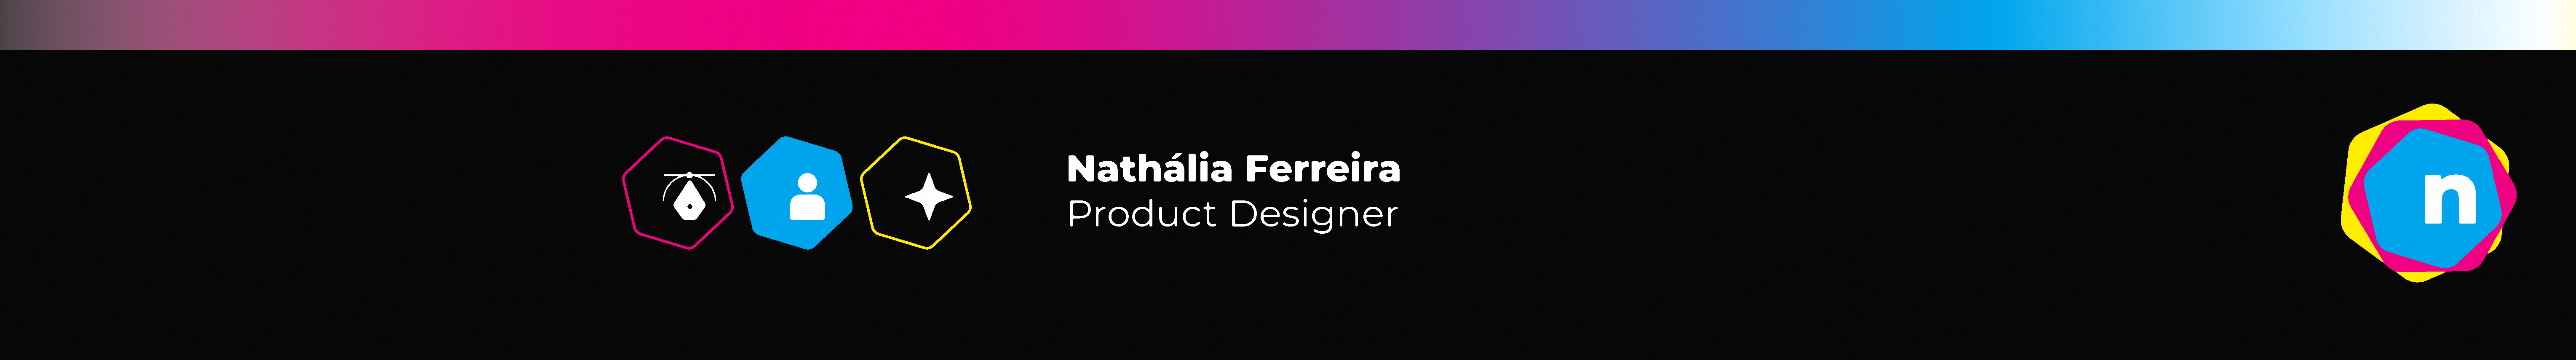 Nathalia Ferreira's profile banner